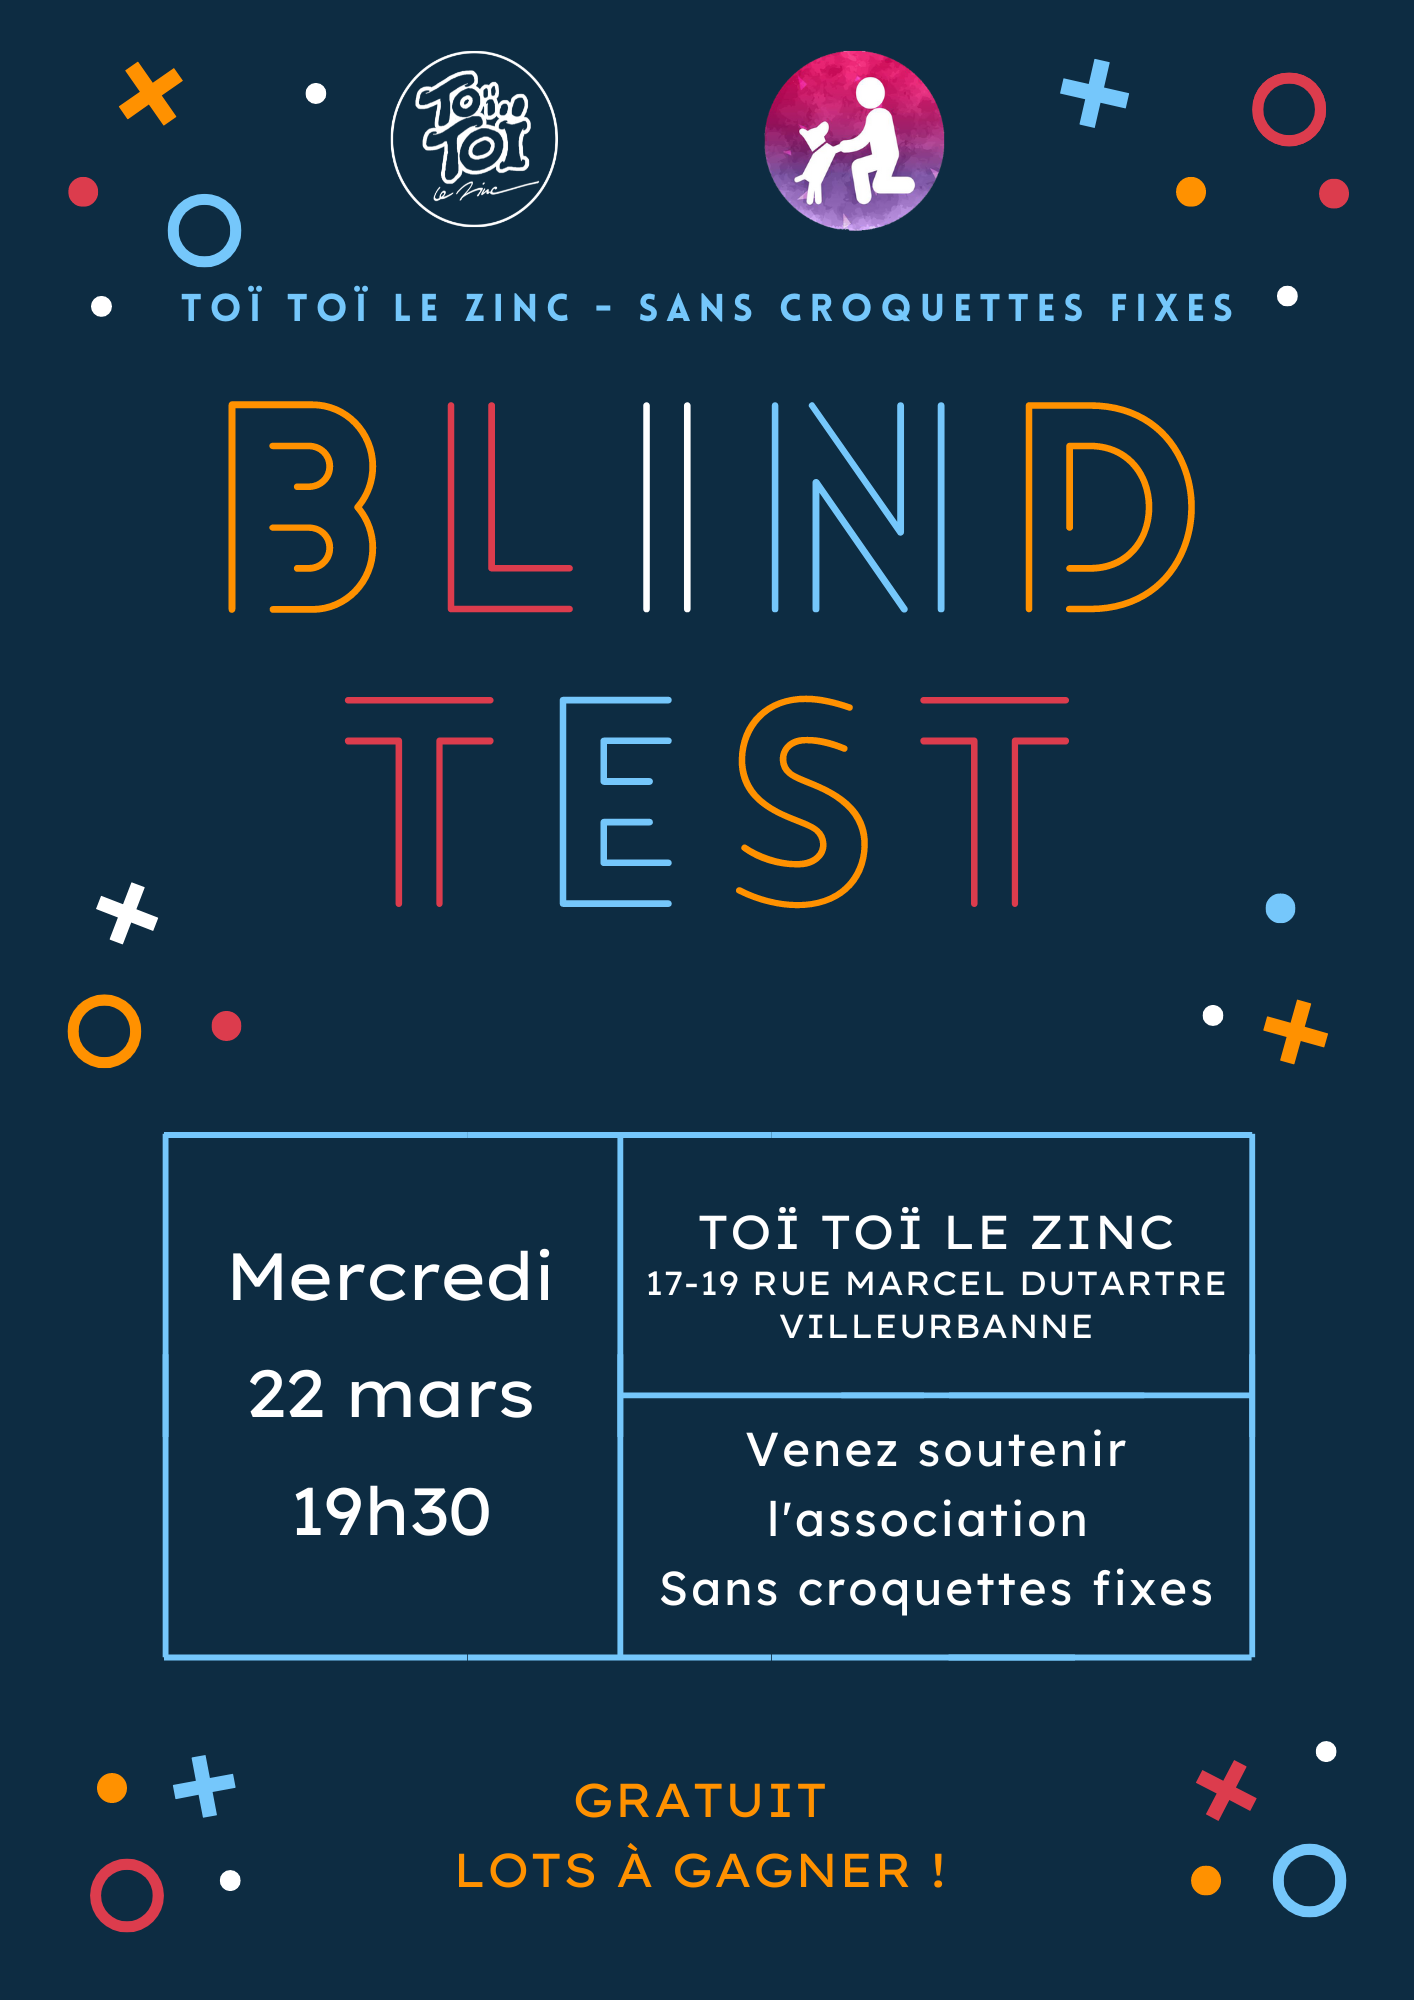 Blind test #8